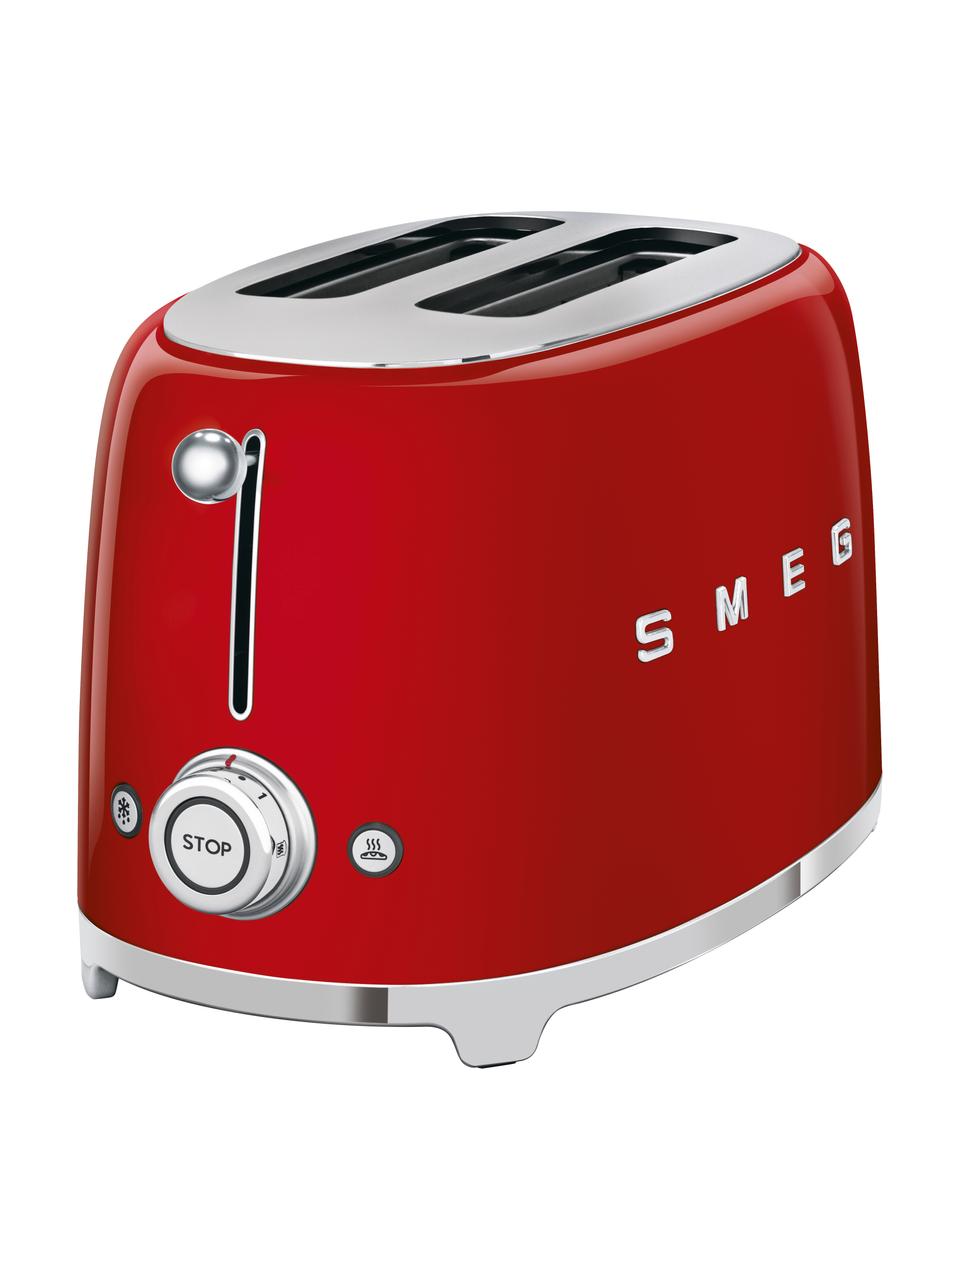 Kompakt Toaster 50's Style, Edelstahl, lackiert, Rot, glänzend, B 31 x H 20 cm